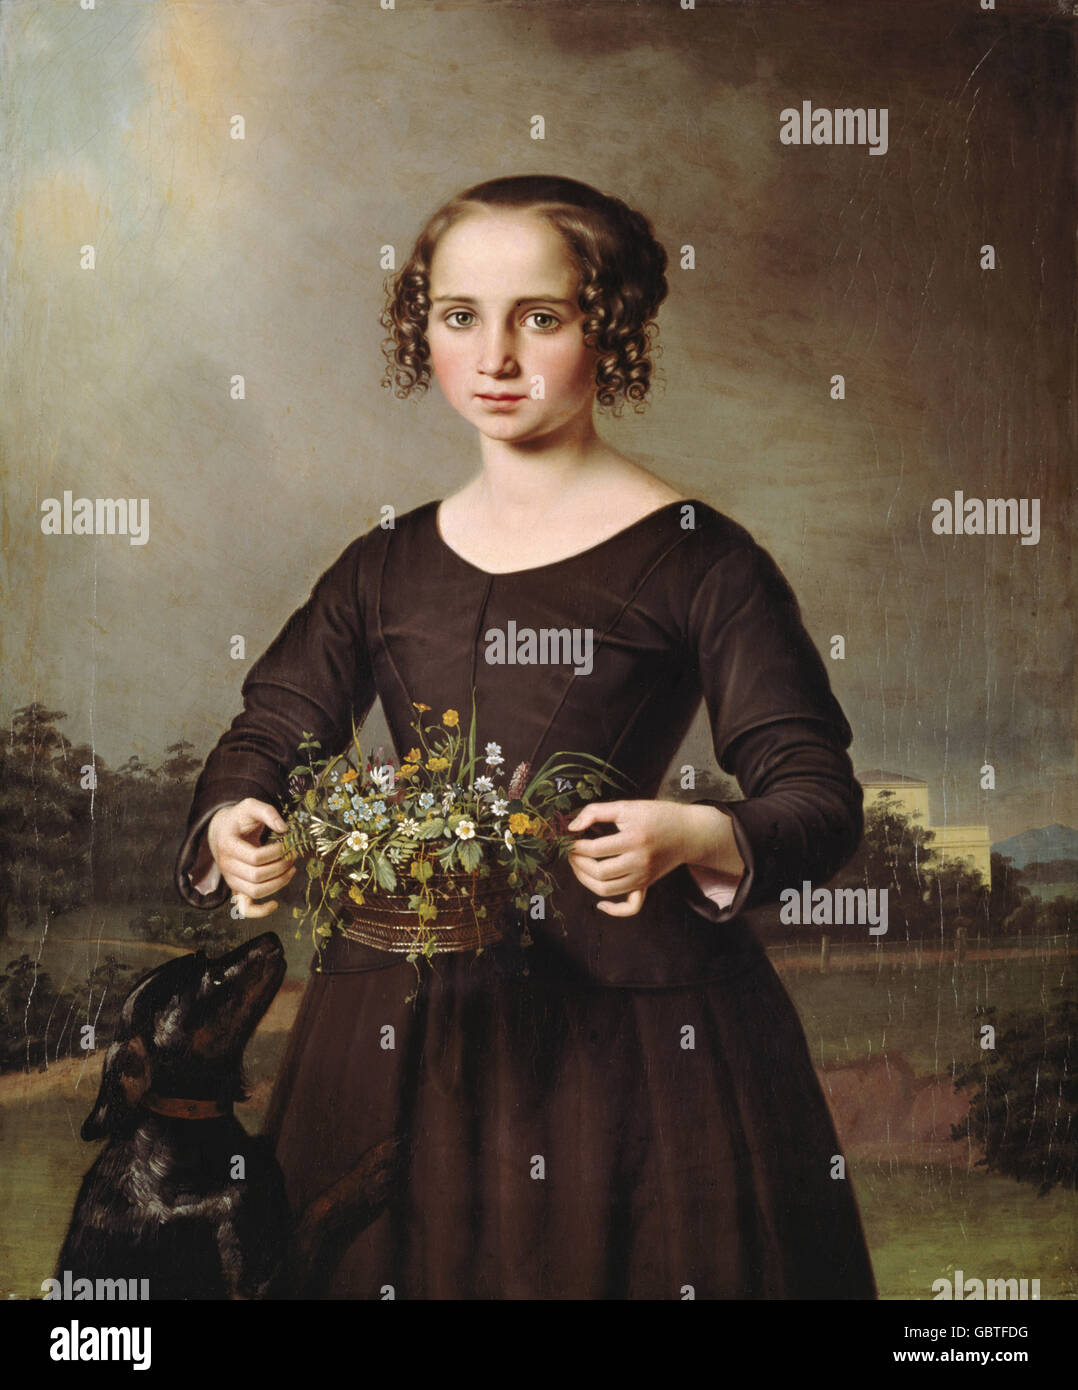 fine arts, Rayski, Ferdinand Louis von, (23.10.1806 - 23.10.1890), painting 'Image of a Girl', 1850s, 69 x 57 cm, Lindenau Museum, Altenburg, Stock Photo